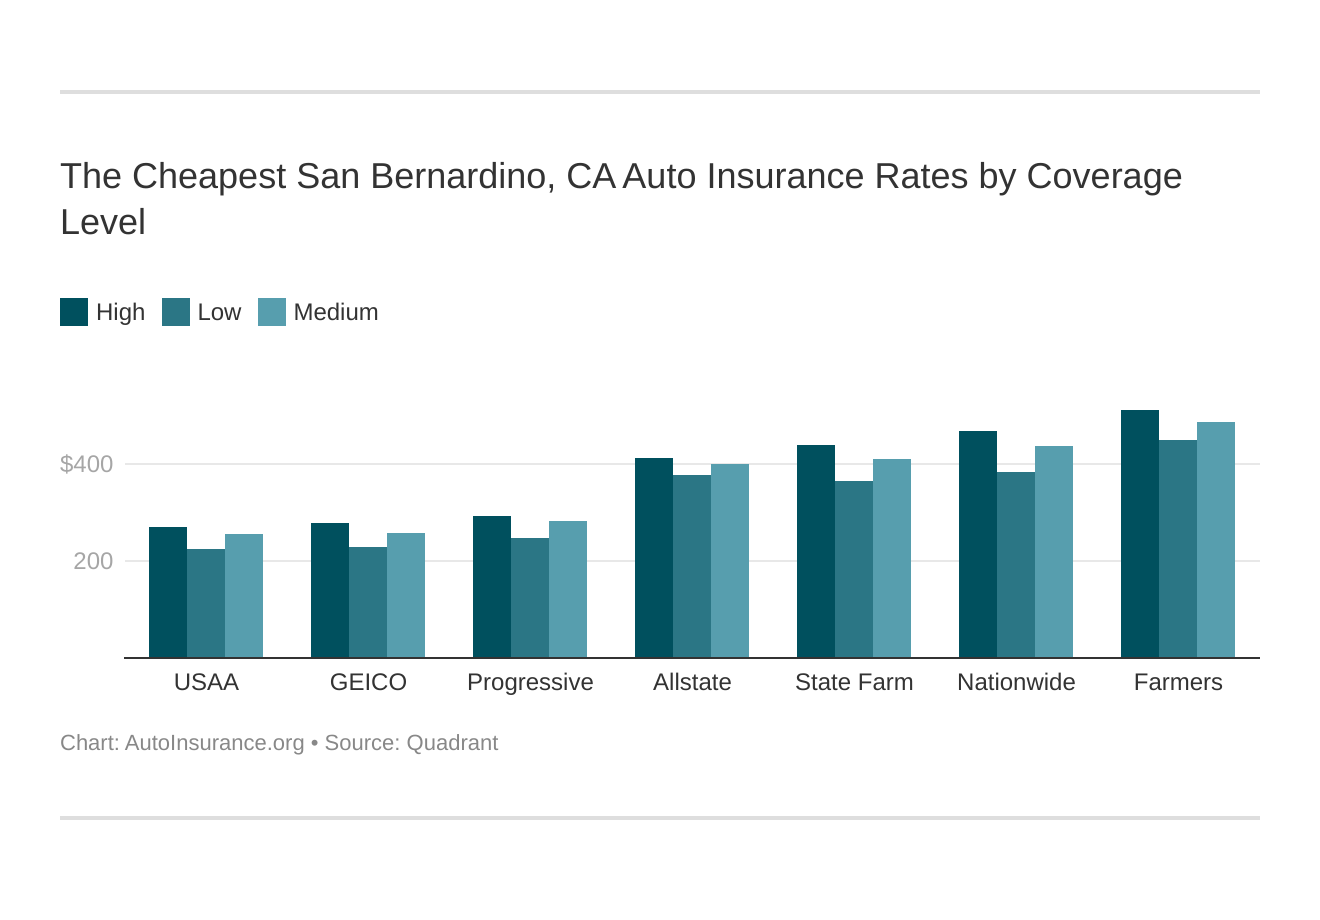 The Cheapest San Bernardino, CA Auto Insurance Rates by Coverage Level